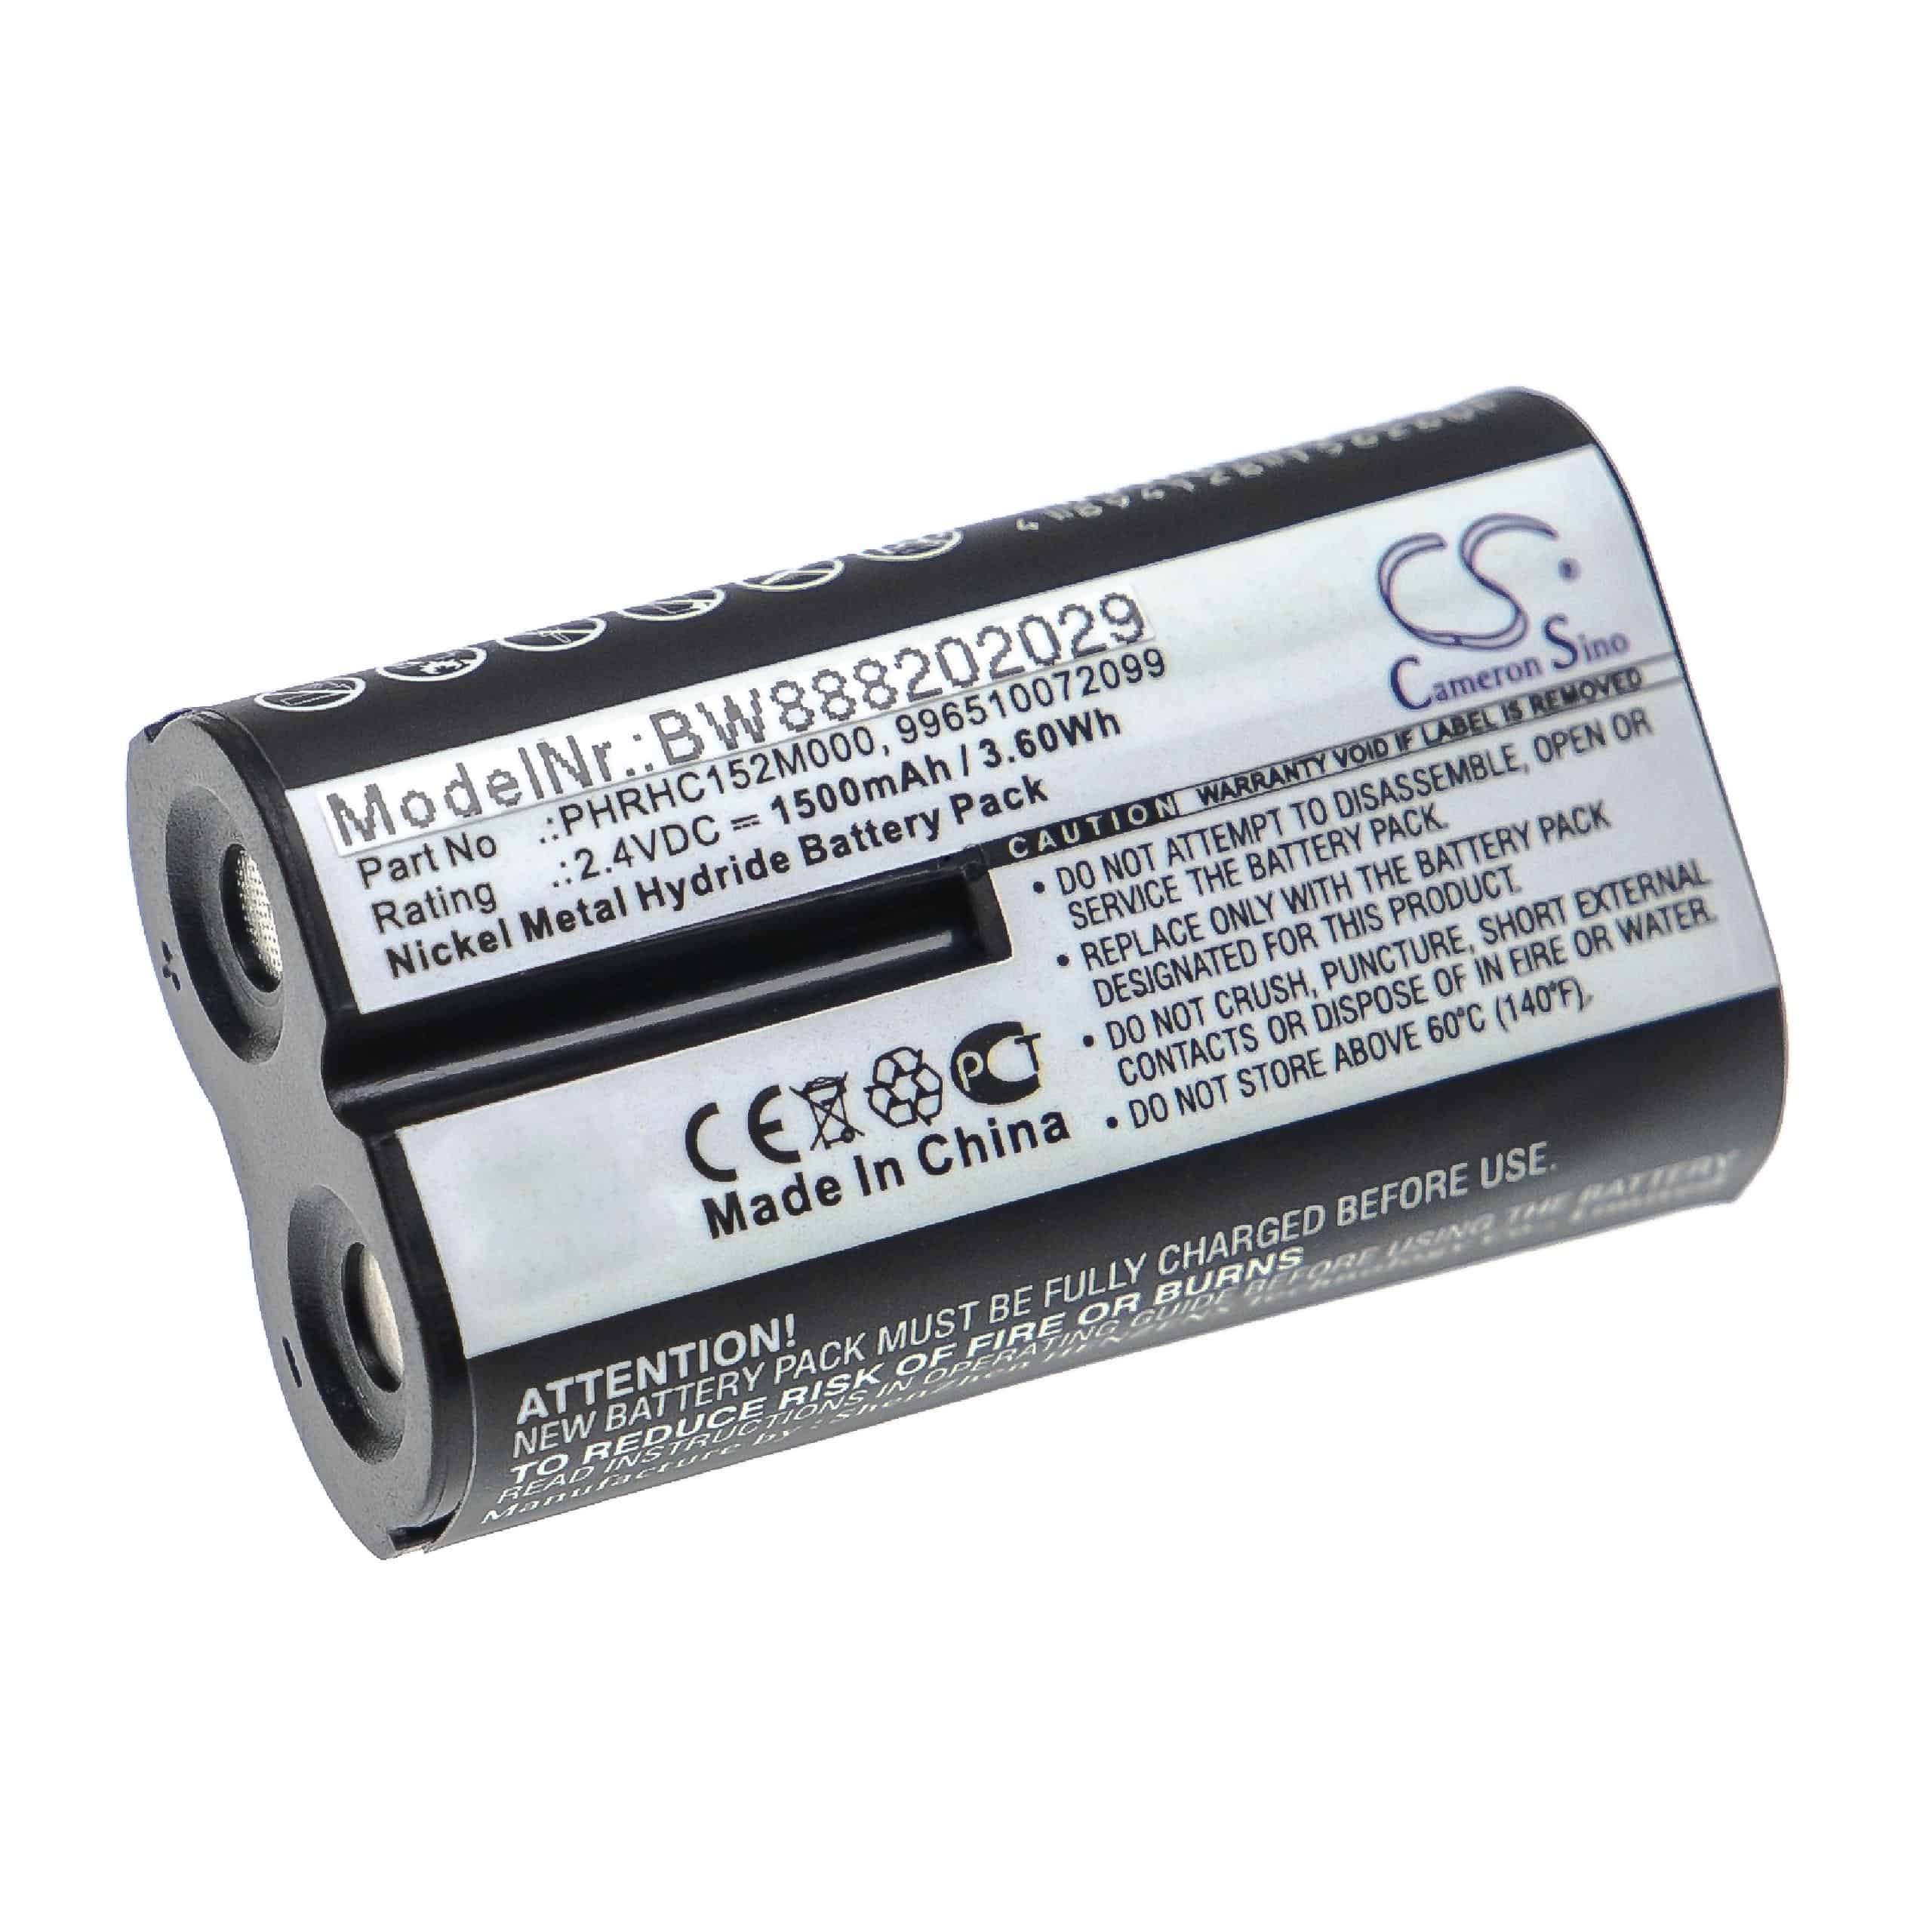 Akumulator do niani elektronicznej zamiennik Philips PHRHC152M000, 996510072099 - 1500 mAh 2,4 V NiMH